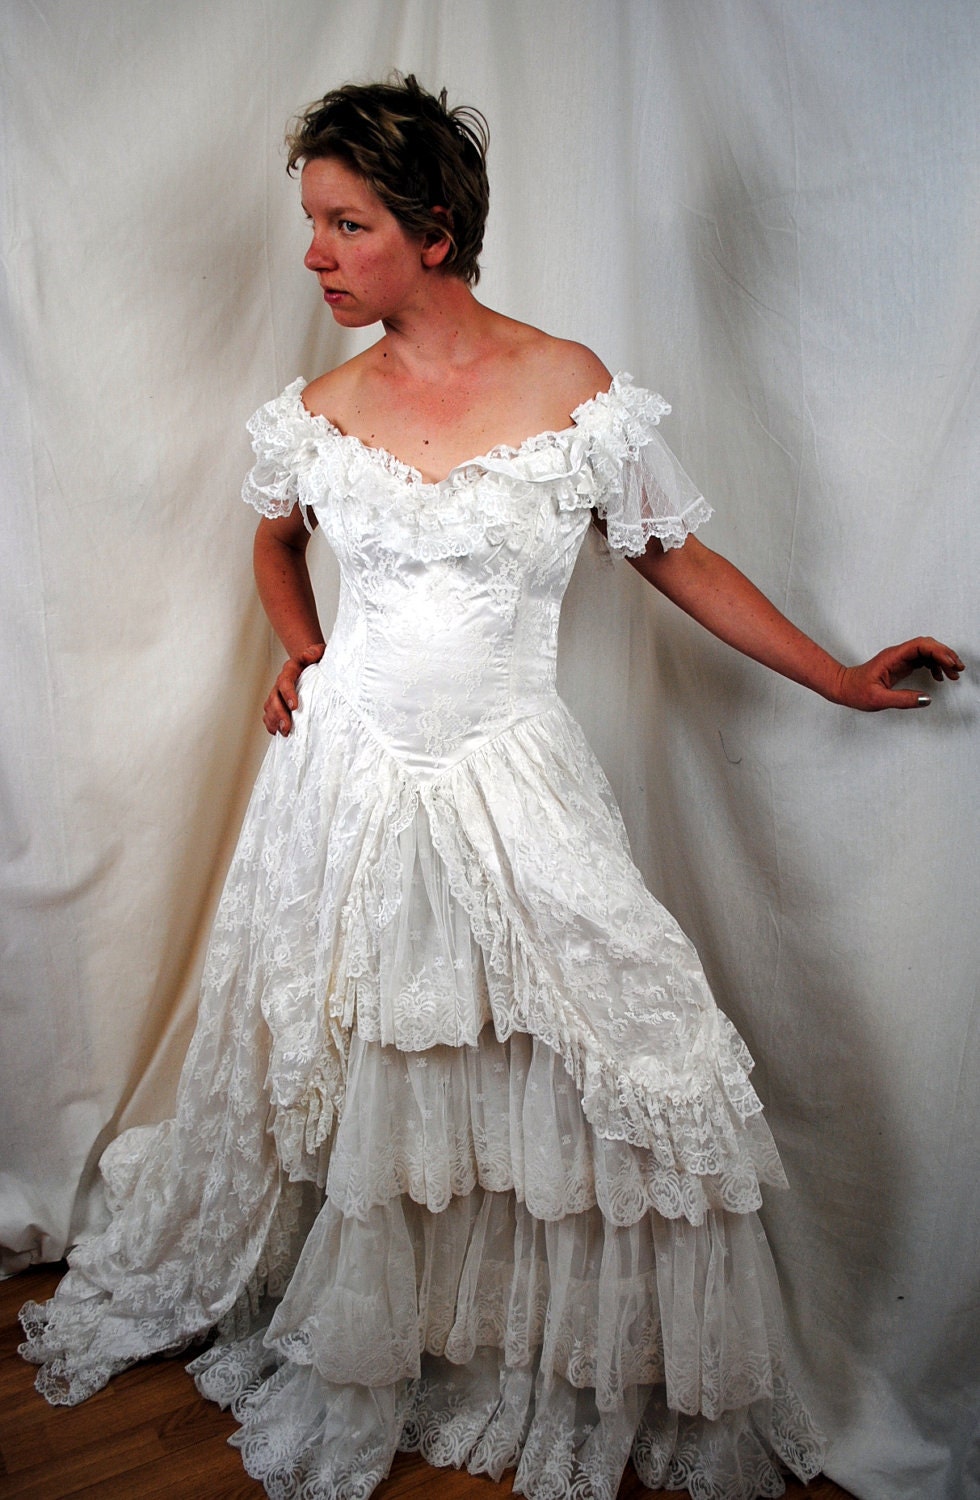 Romulusflood: Southern Belle Wedding Dresses